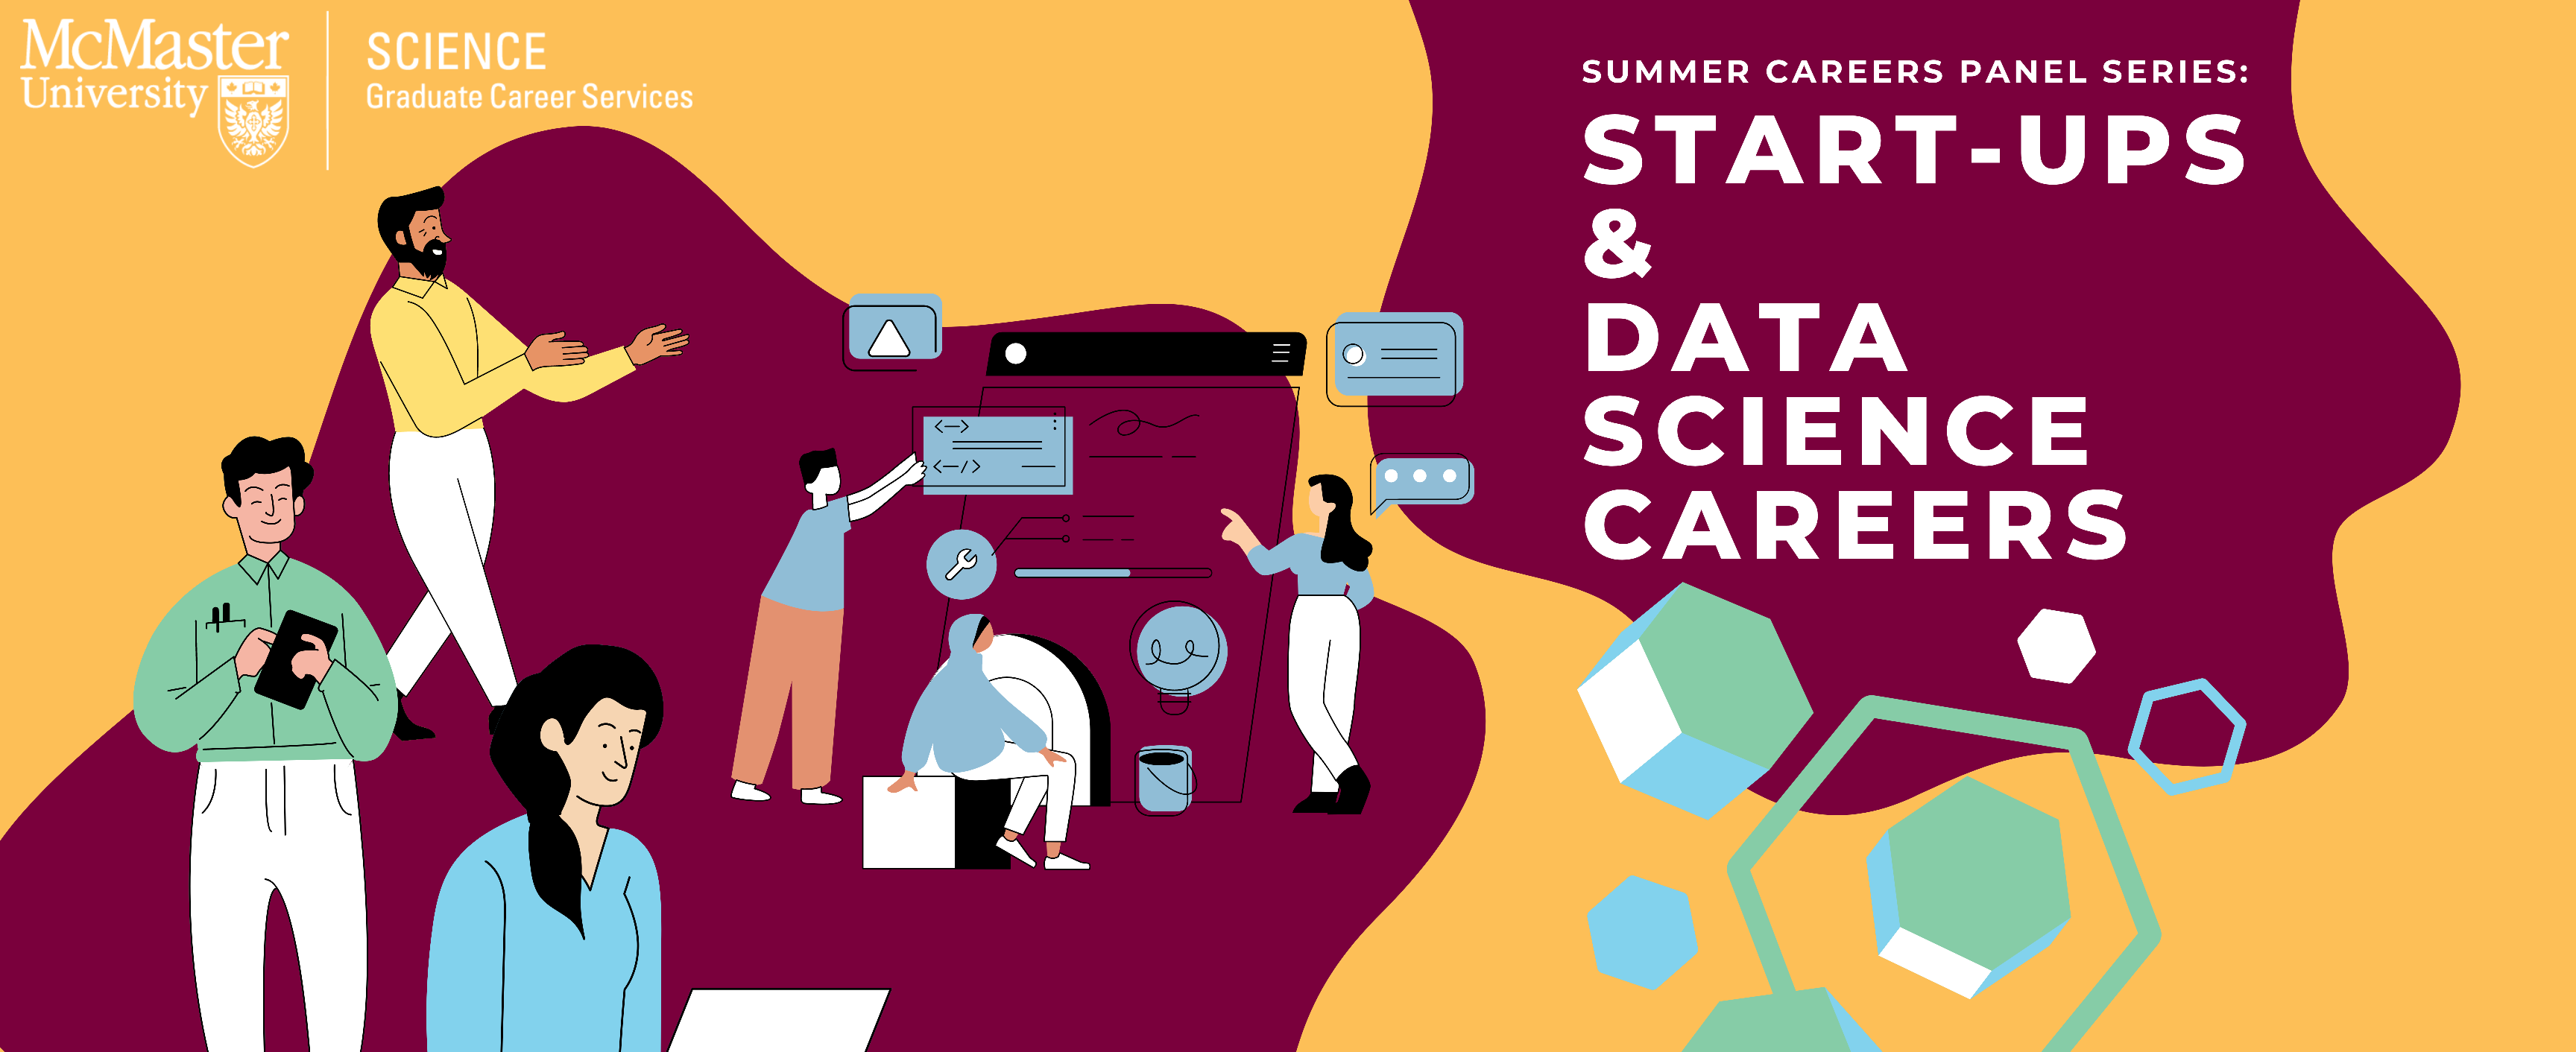 Summer Career Panels Series: Start-Ups & Data Science Careers